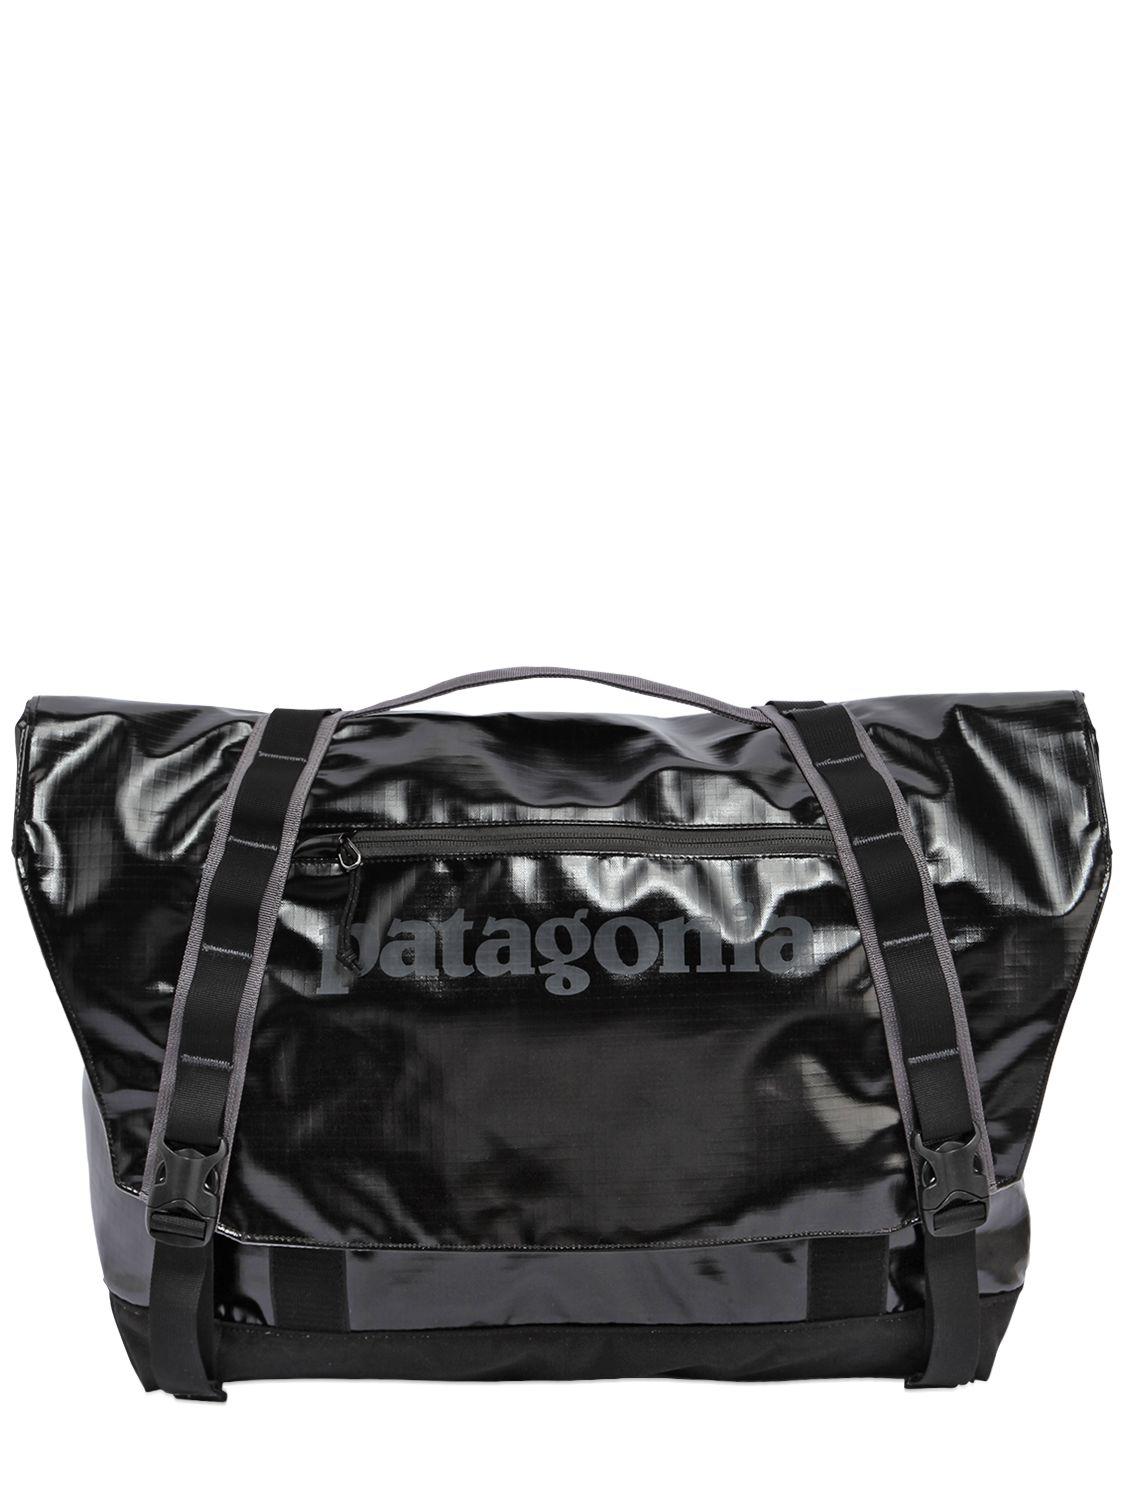 Patagonia 24l Black Hole Waterproof Messenger Bag for Men - Lyst